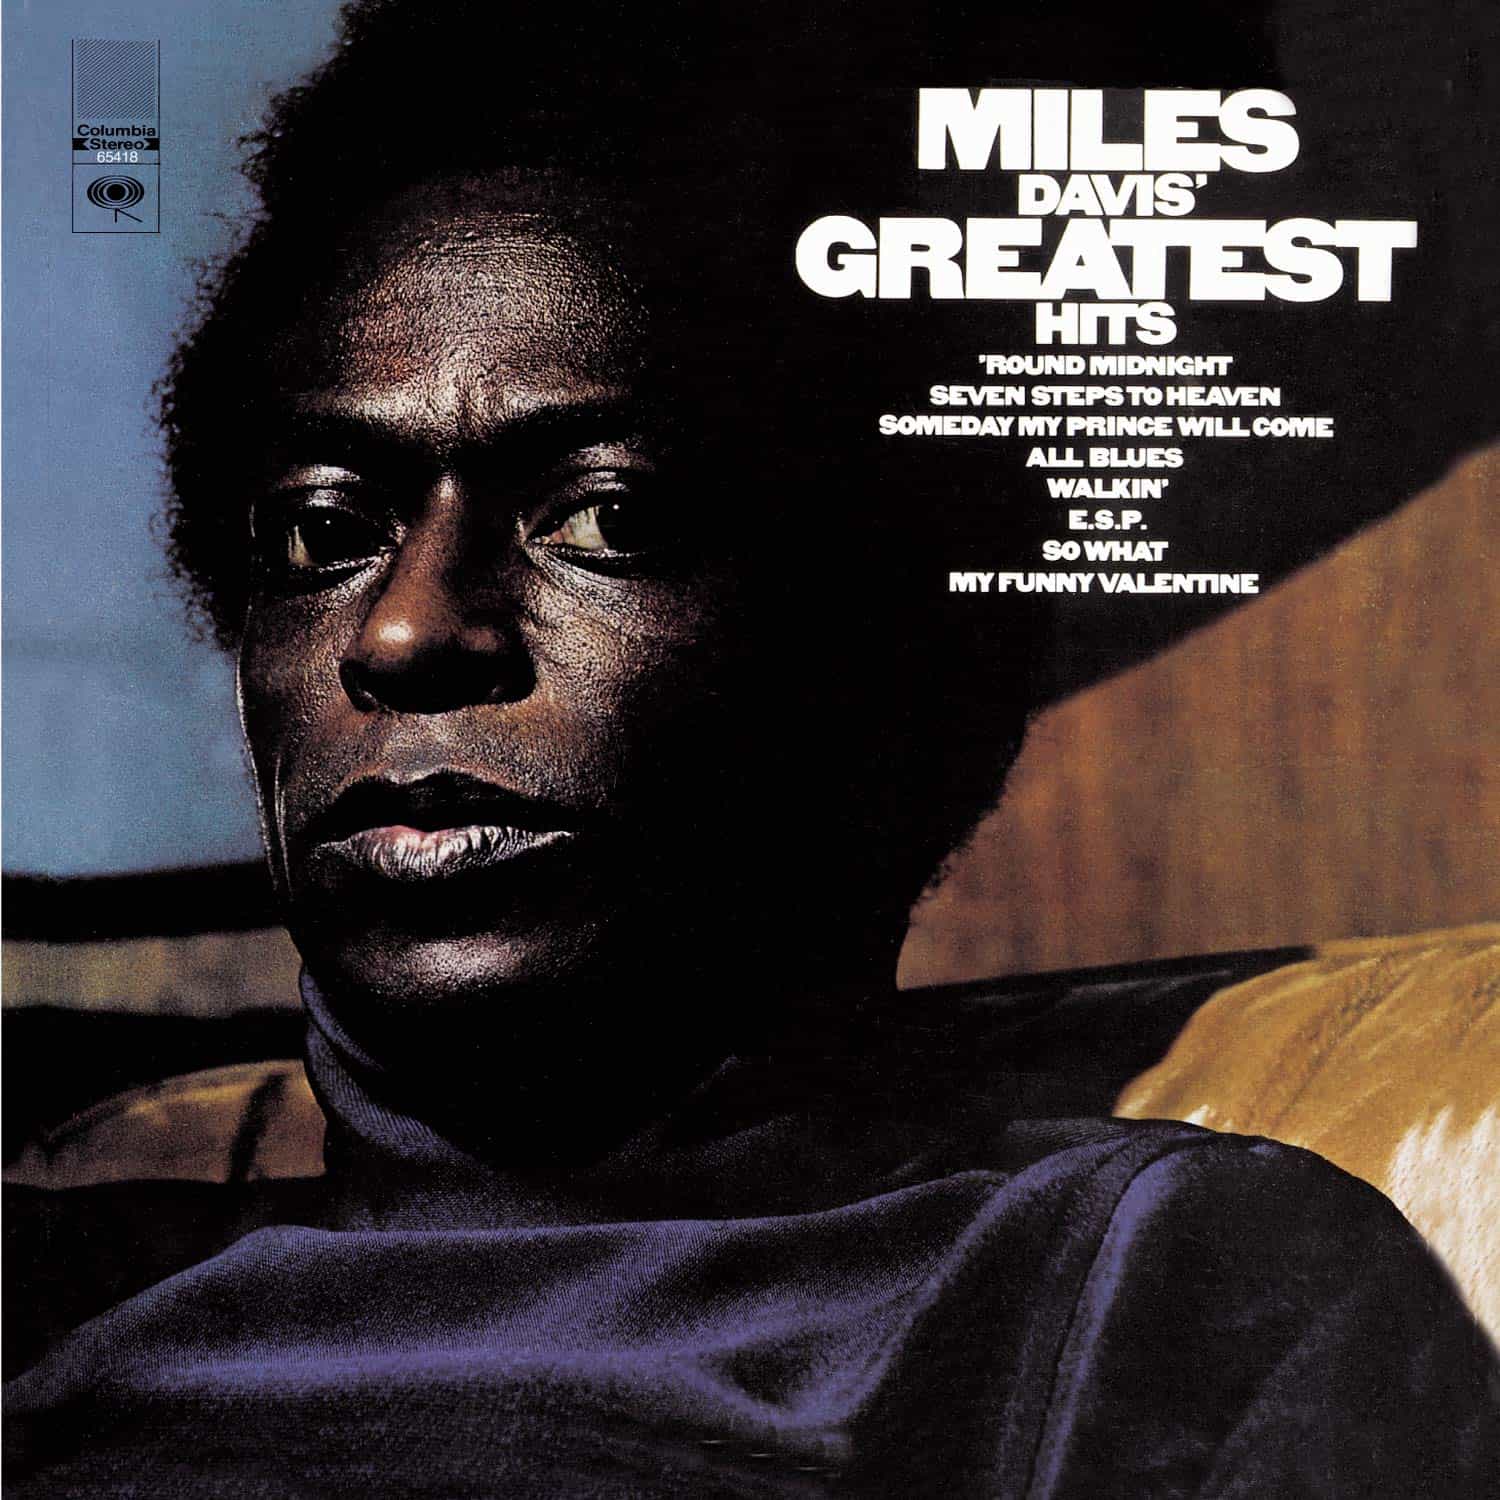 Miles-Davis-Greatest-Hits-vinyl-record-album-front